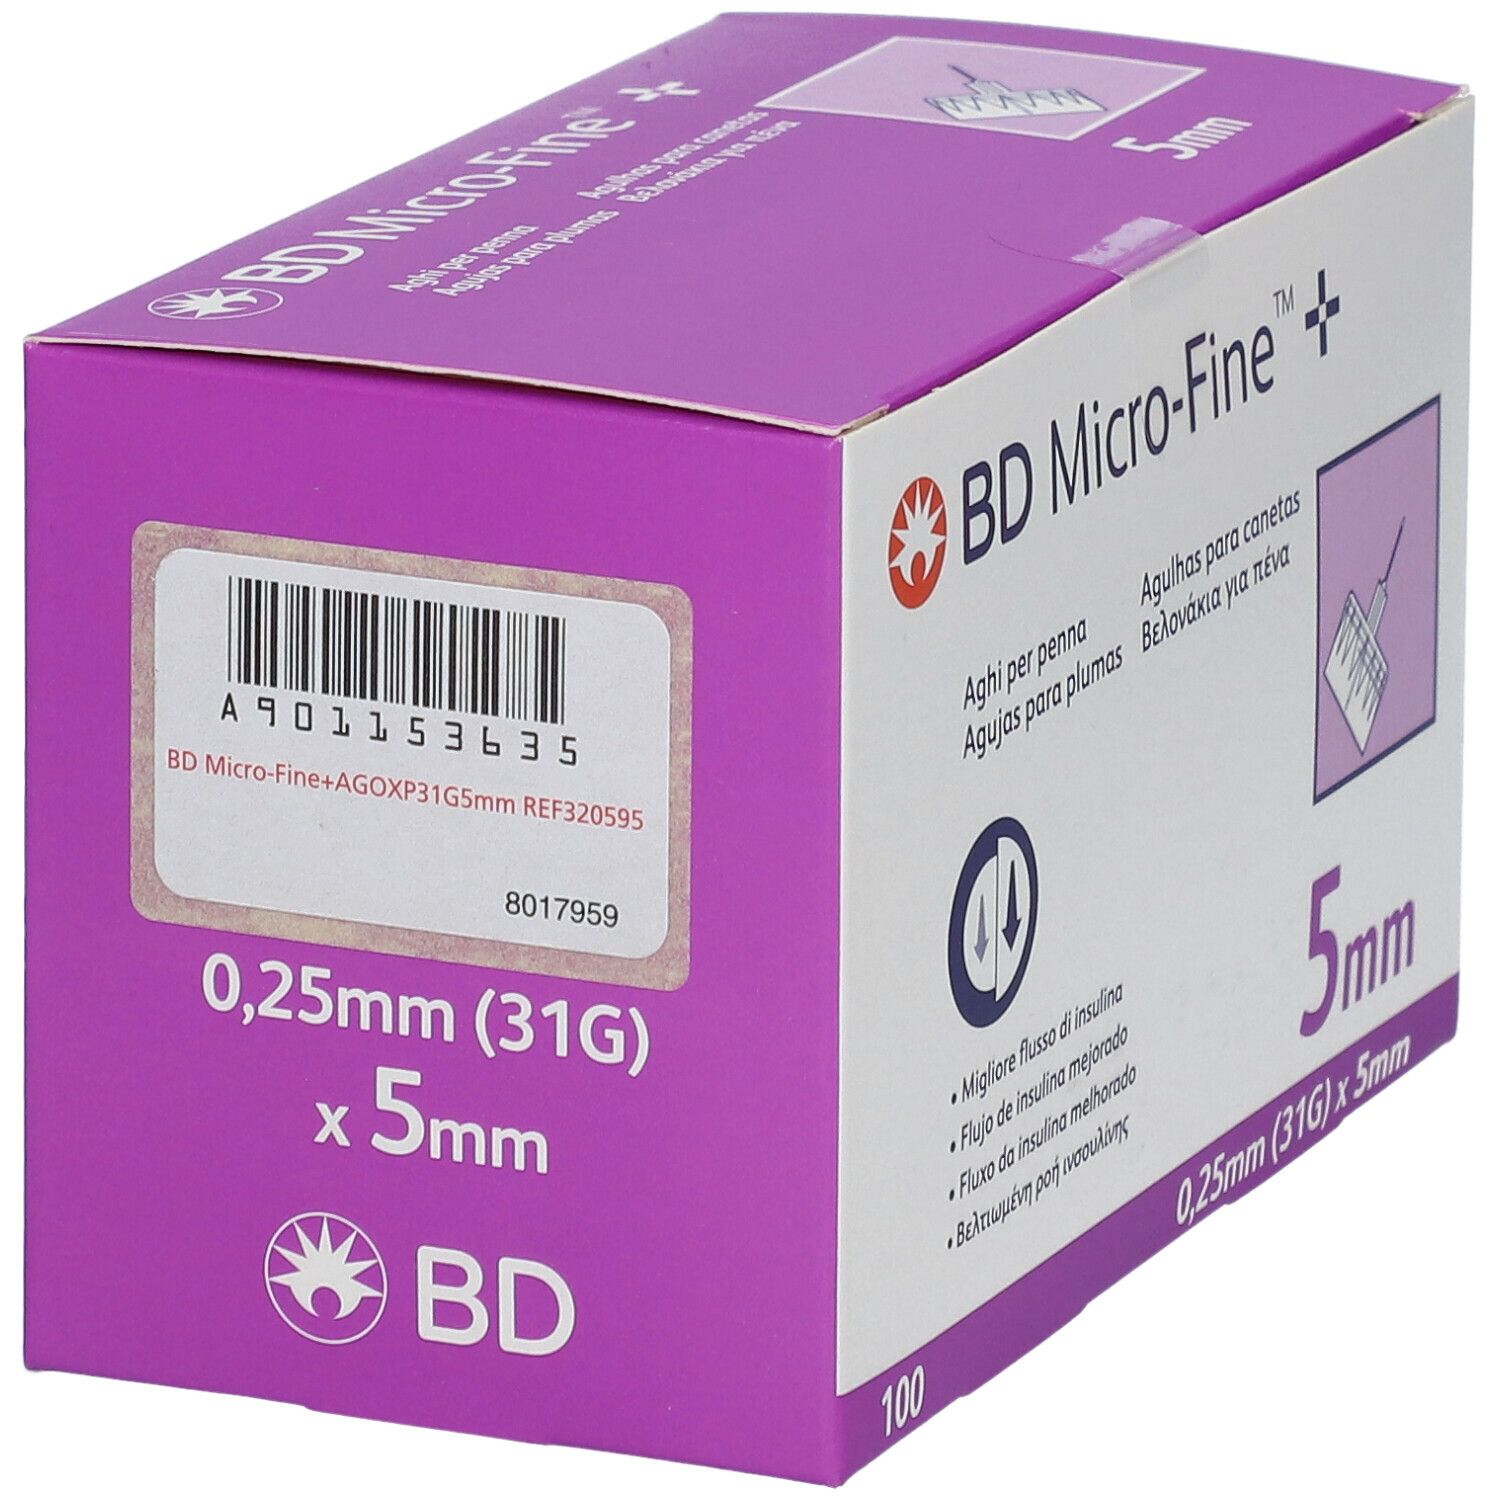 BD Micro-Fine™+ Aghi per Penna 0,25 mm 31G x 5 mm